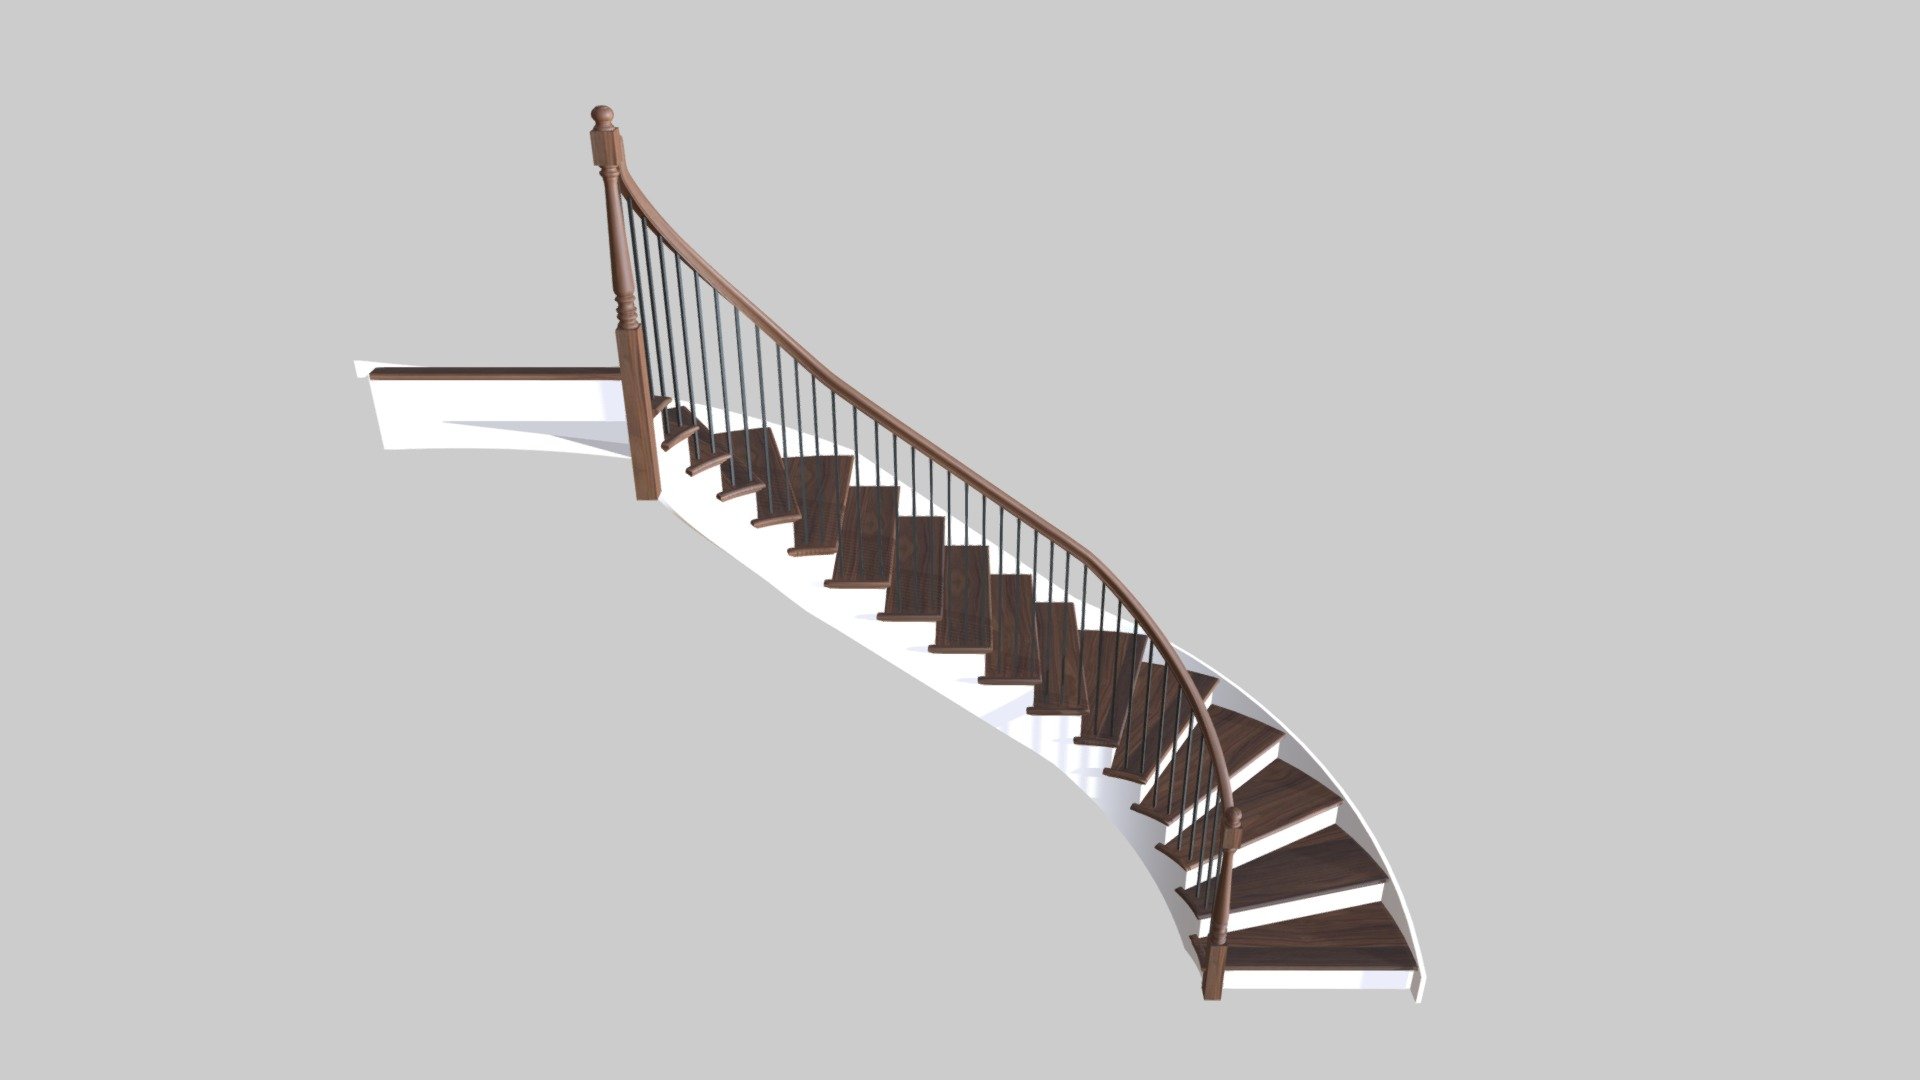 Circular stair - "U" shape